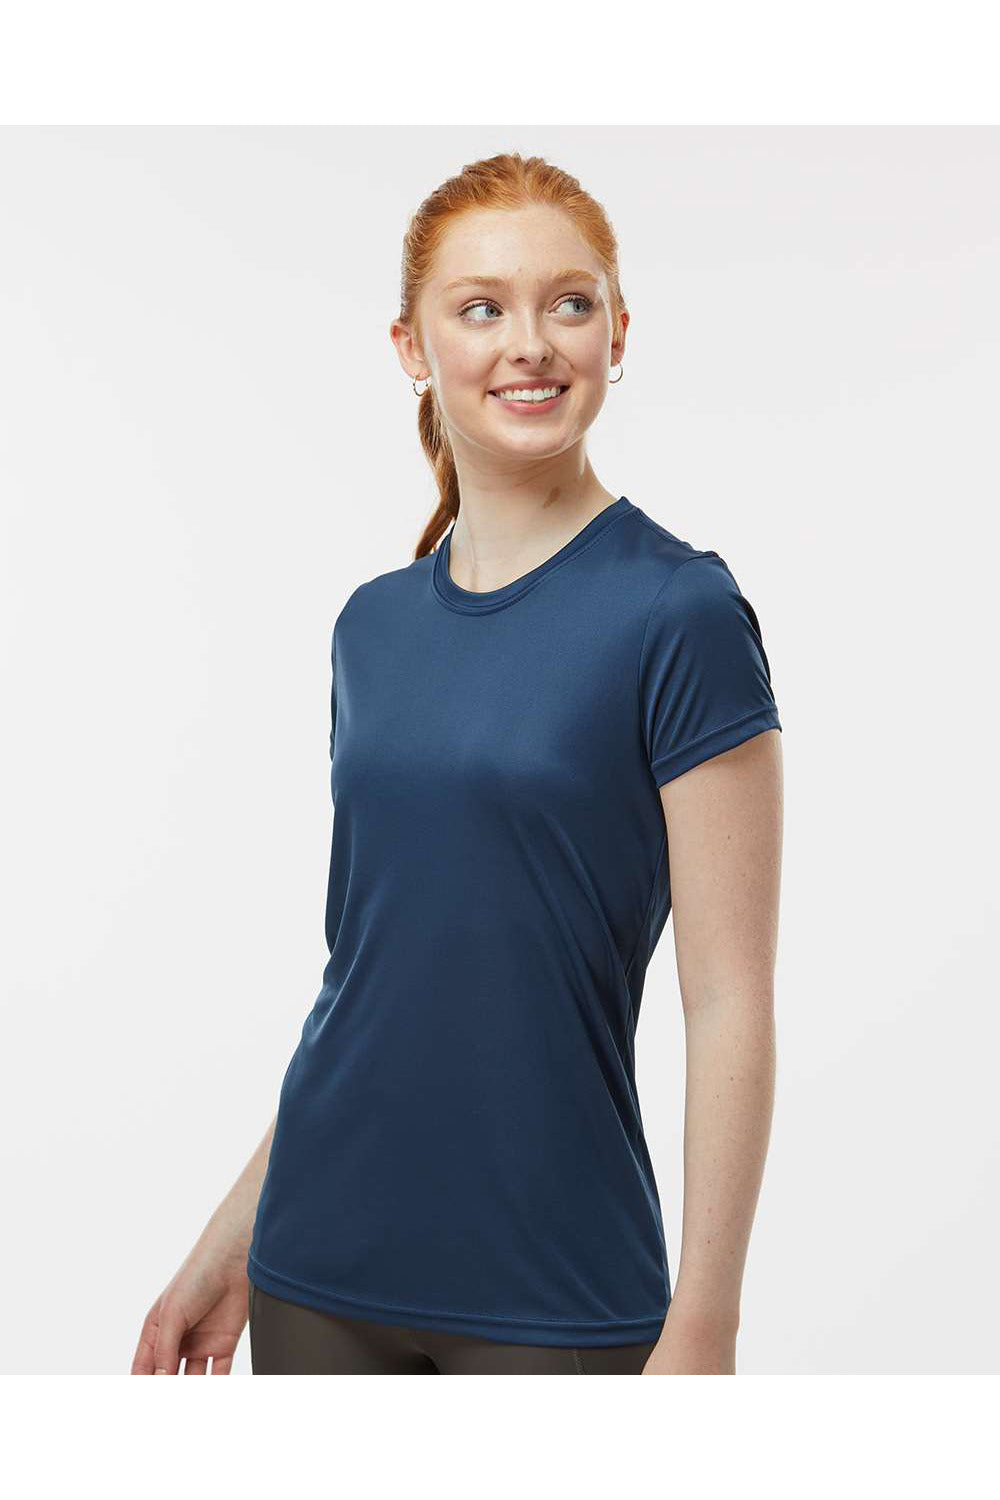 Paragon 204 Womens Islander Performance Short Sleeve Crewneck T-Shirt Navy Blue Model Side